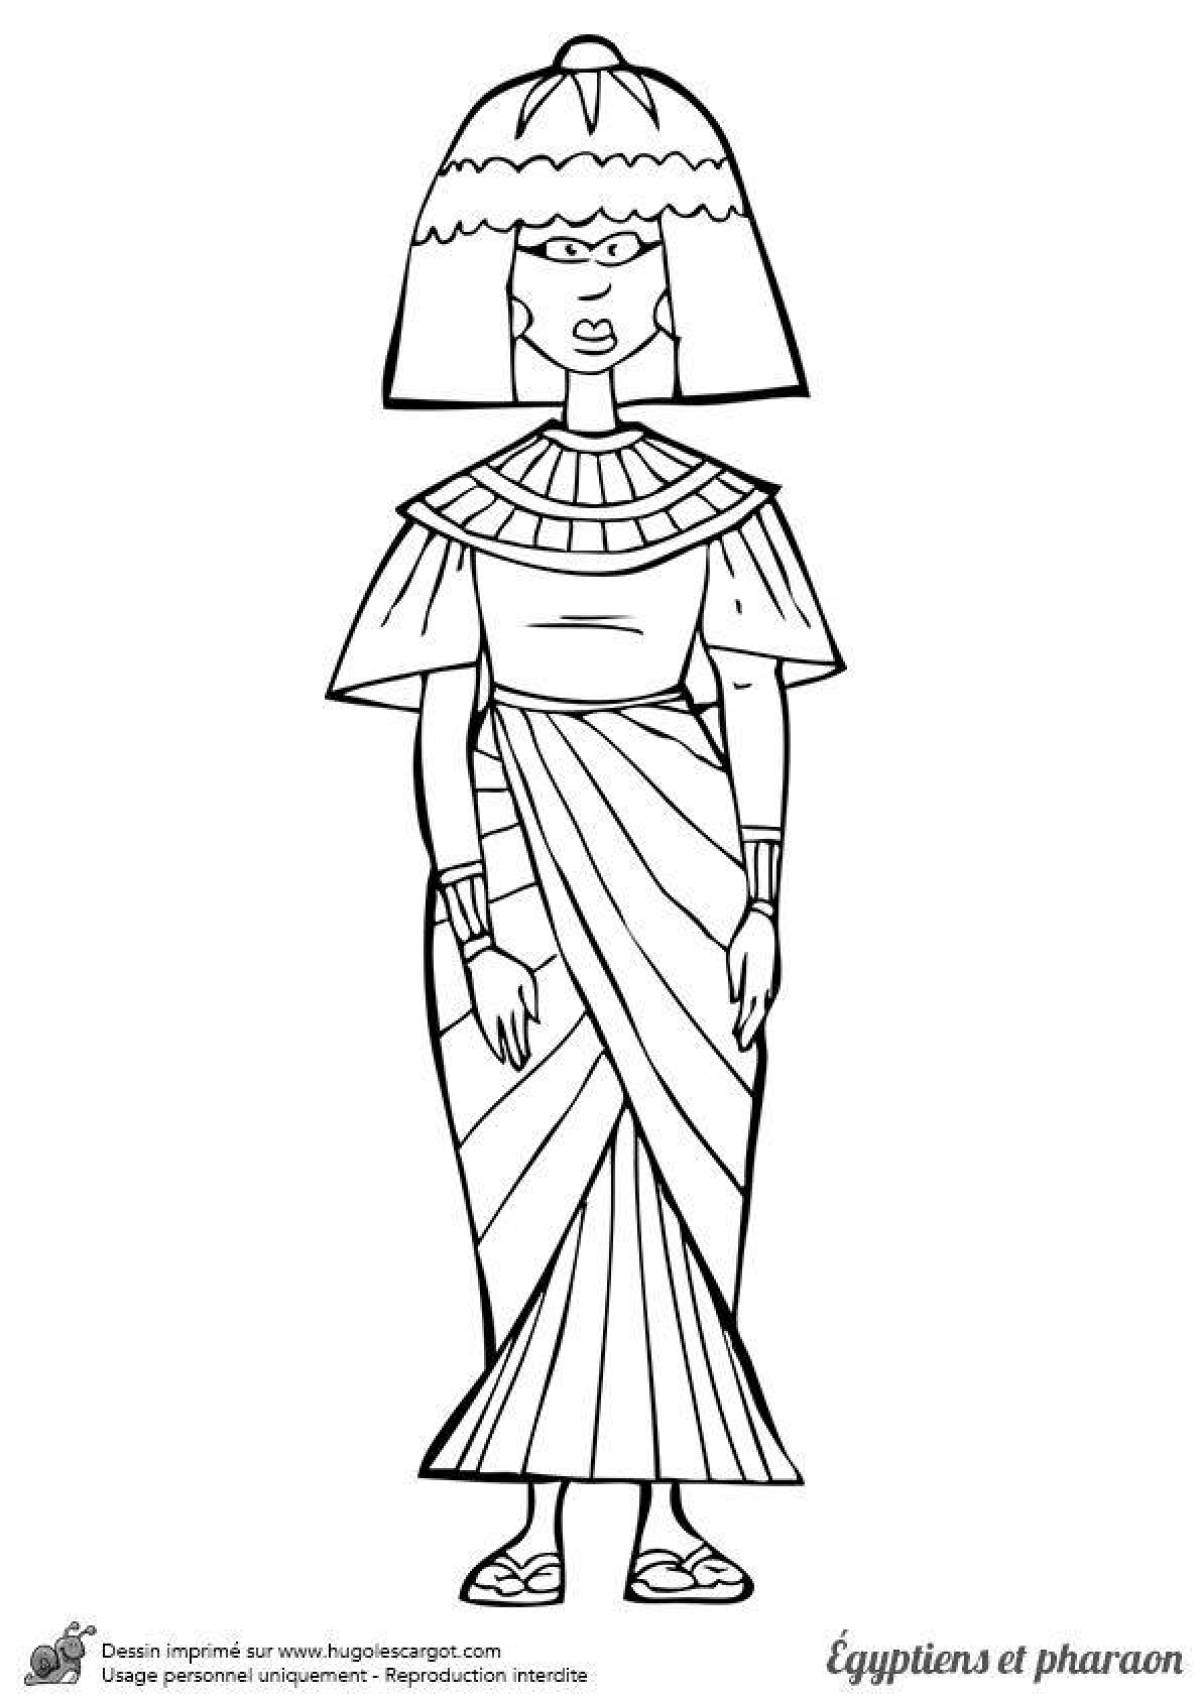 Одежда фараона рисунок